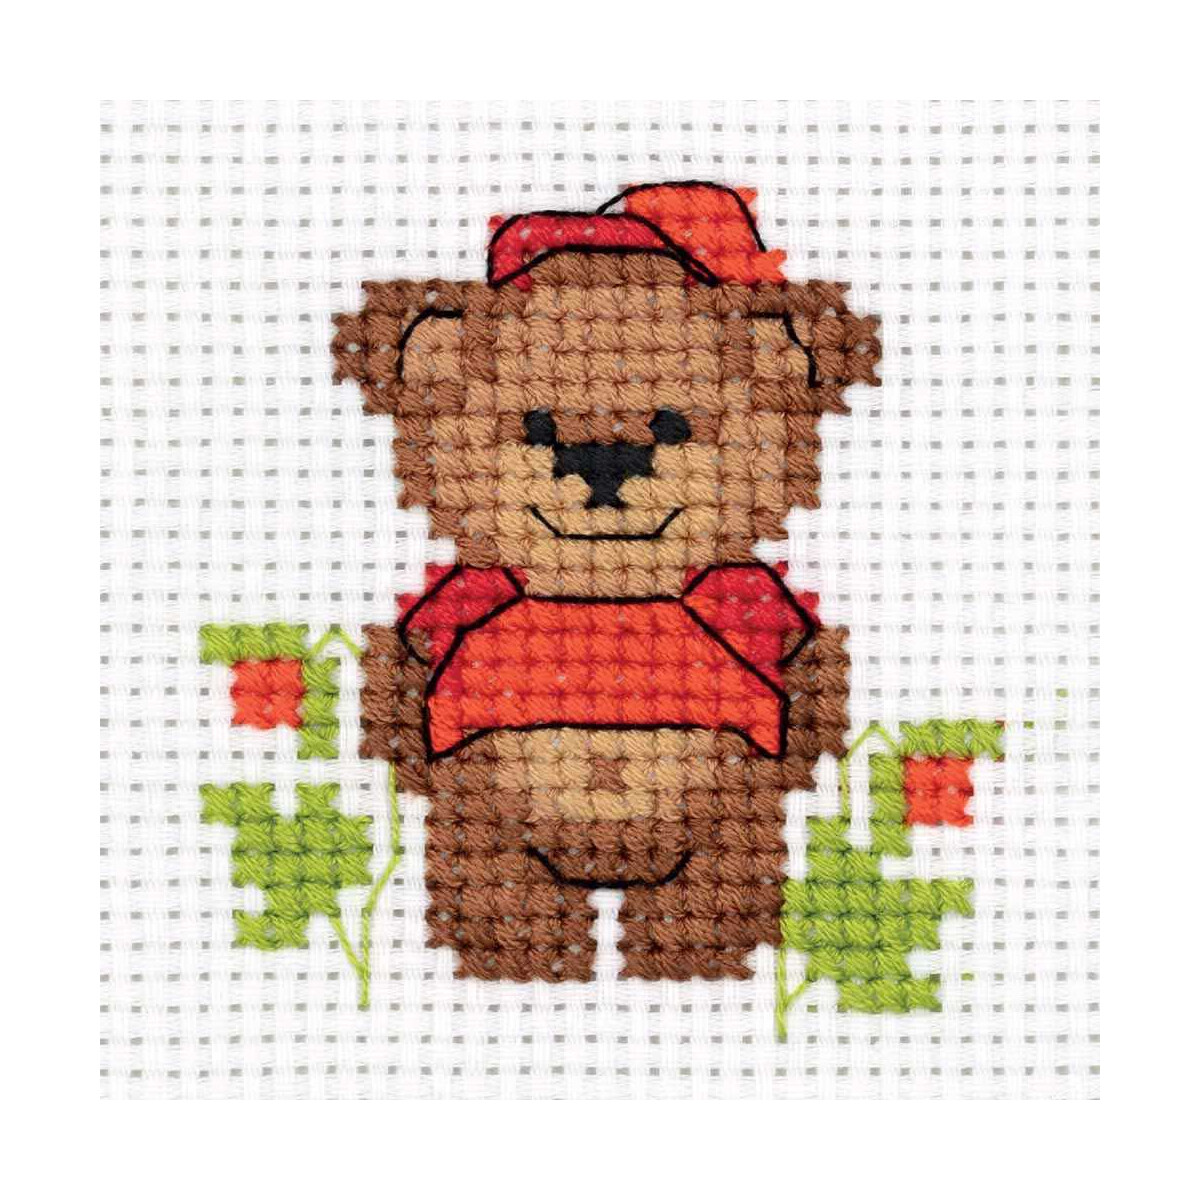 Klart counted cross stitch kit "Baby bear"...